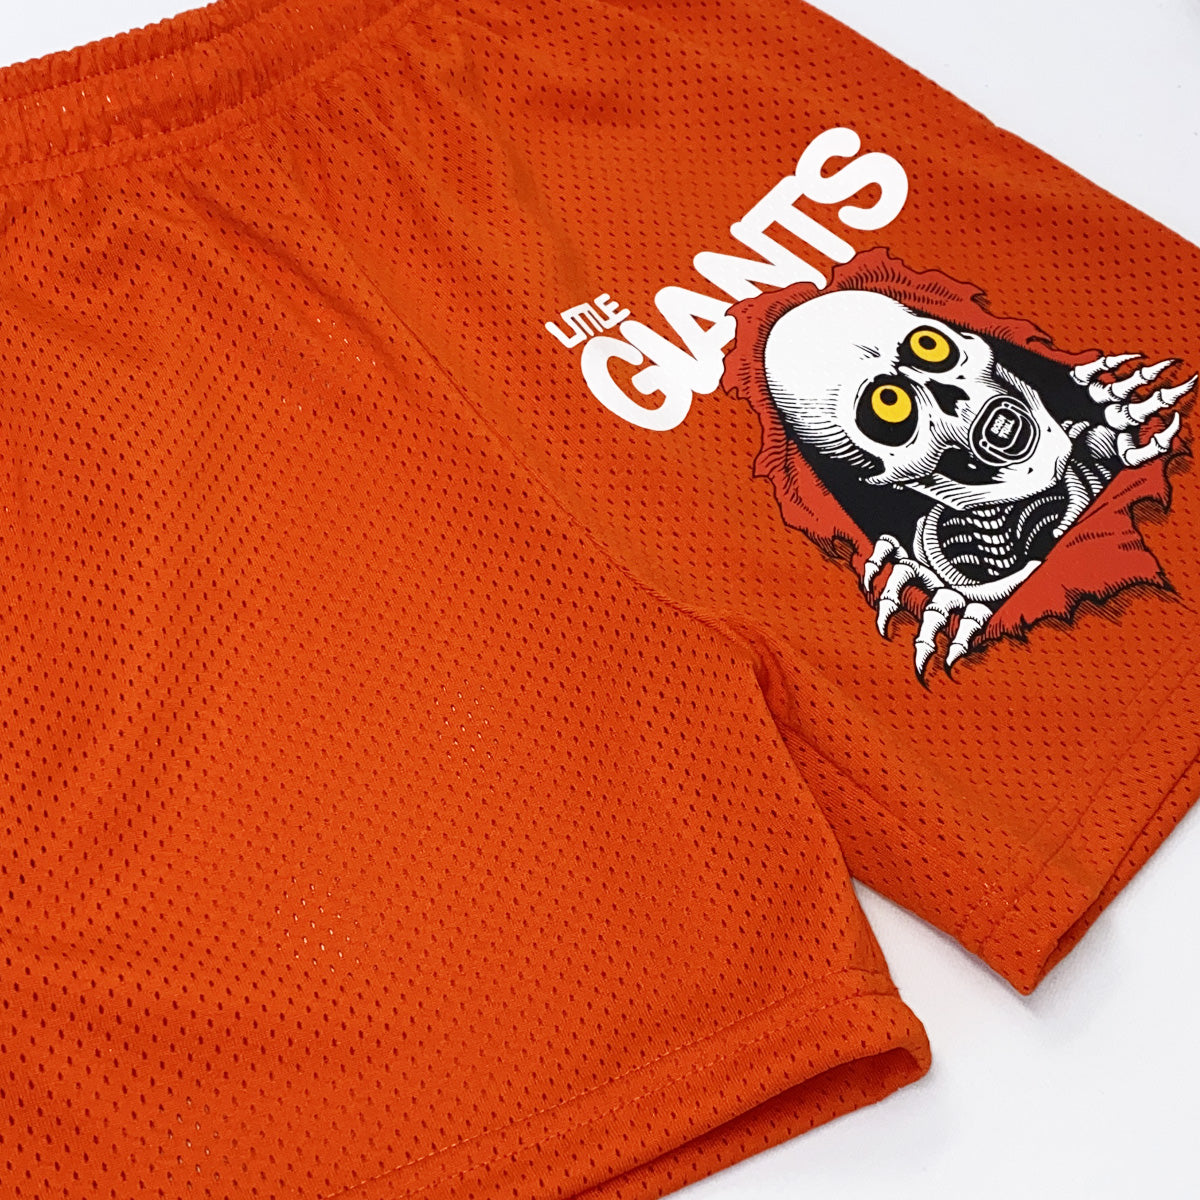 Little Giants Kids Shorts (Orange)